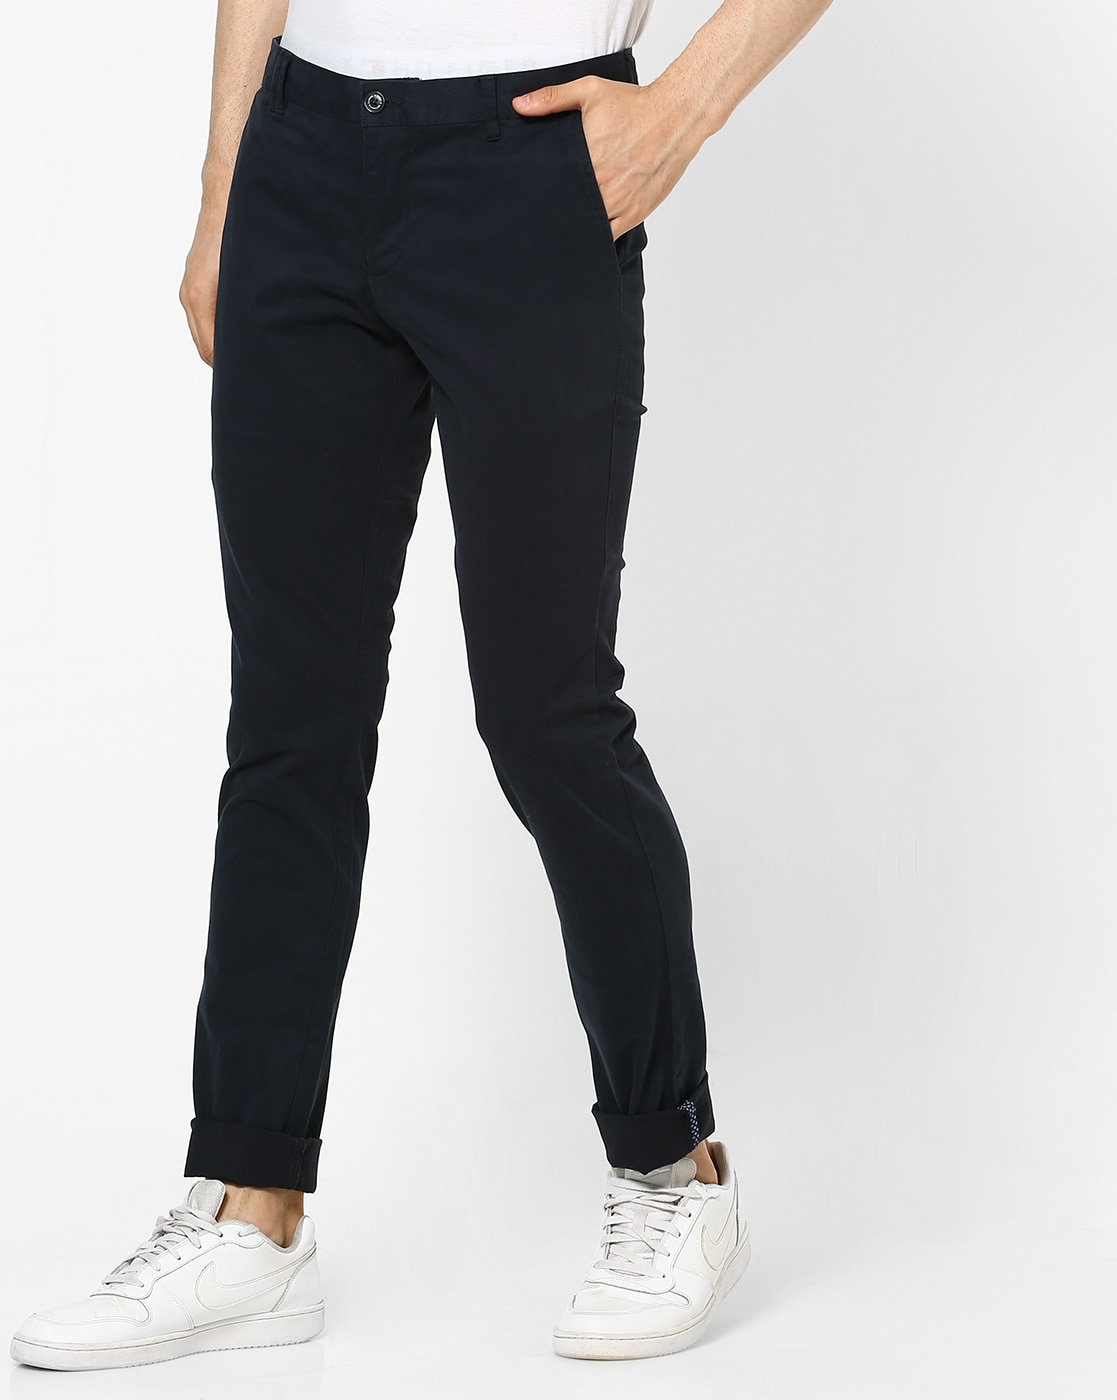 Buy Blue Trousers  Pants for Men by PARX Online  Ajiocom